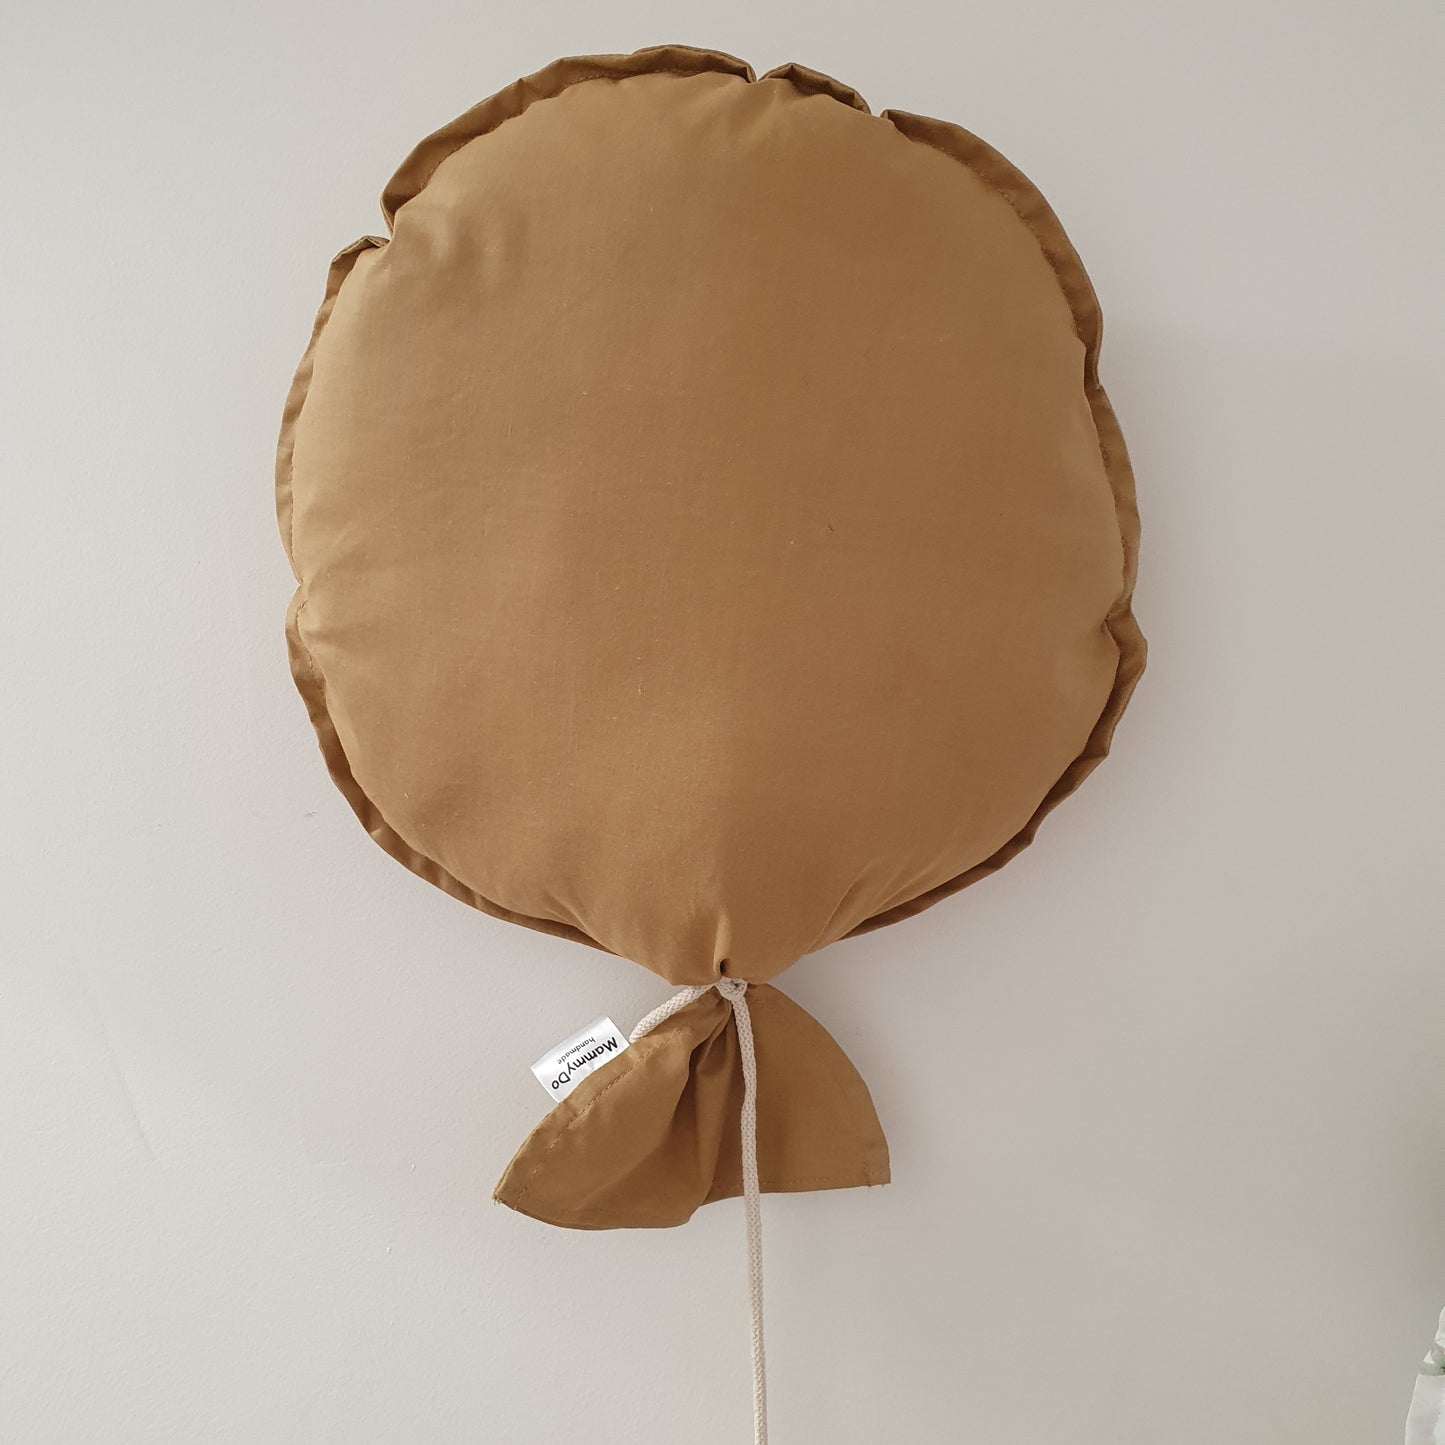 Brown fabric balloon